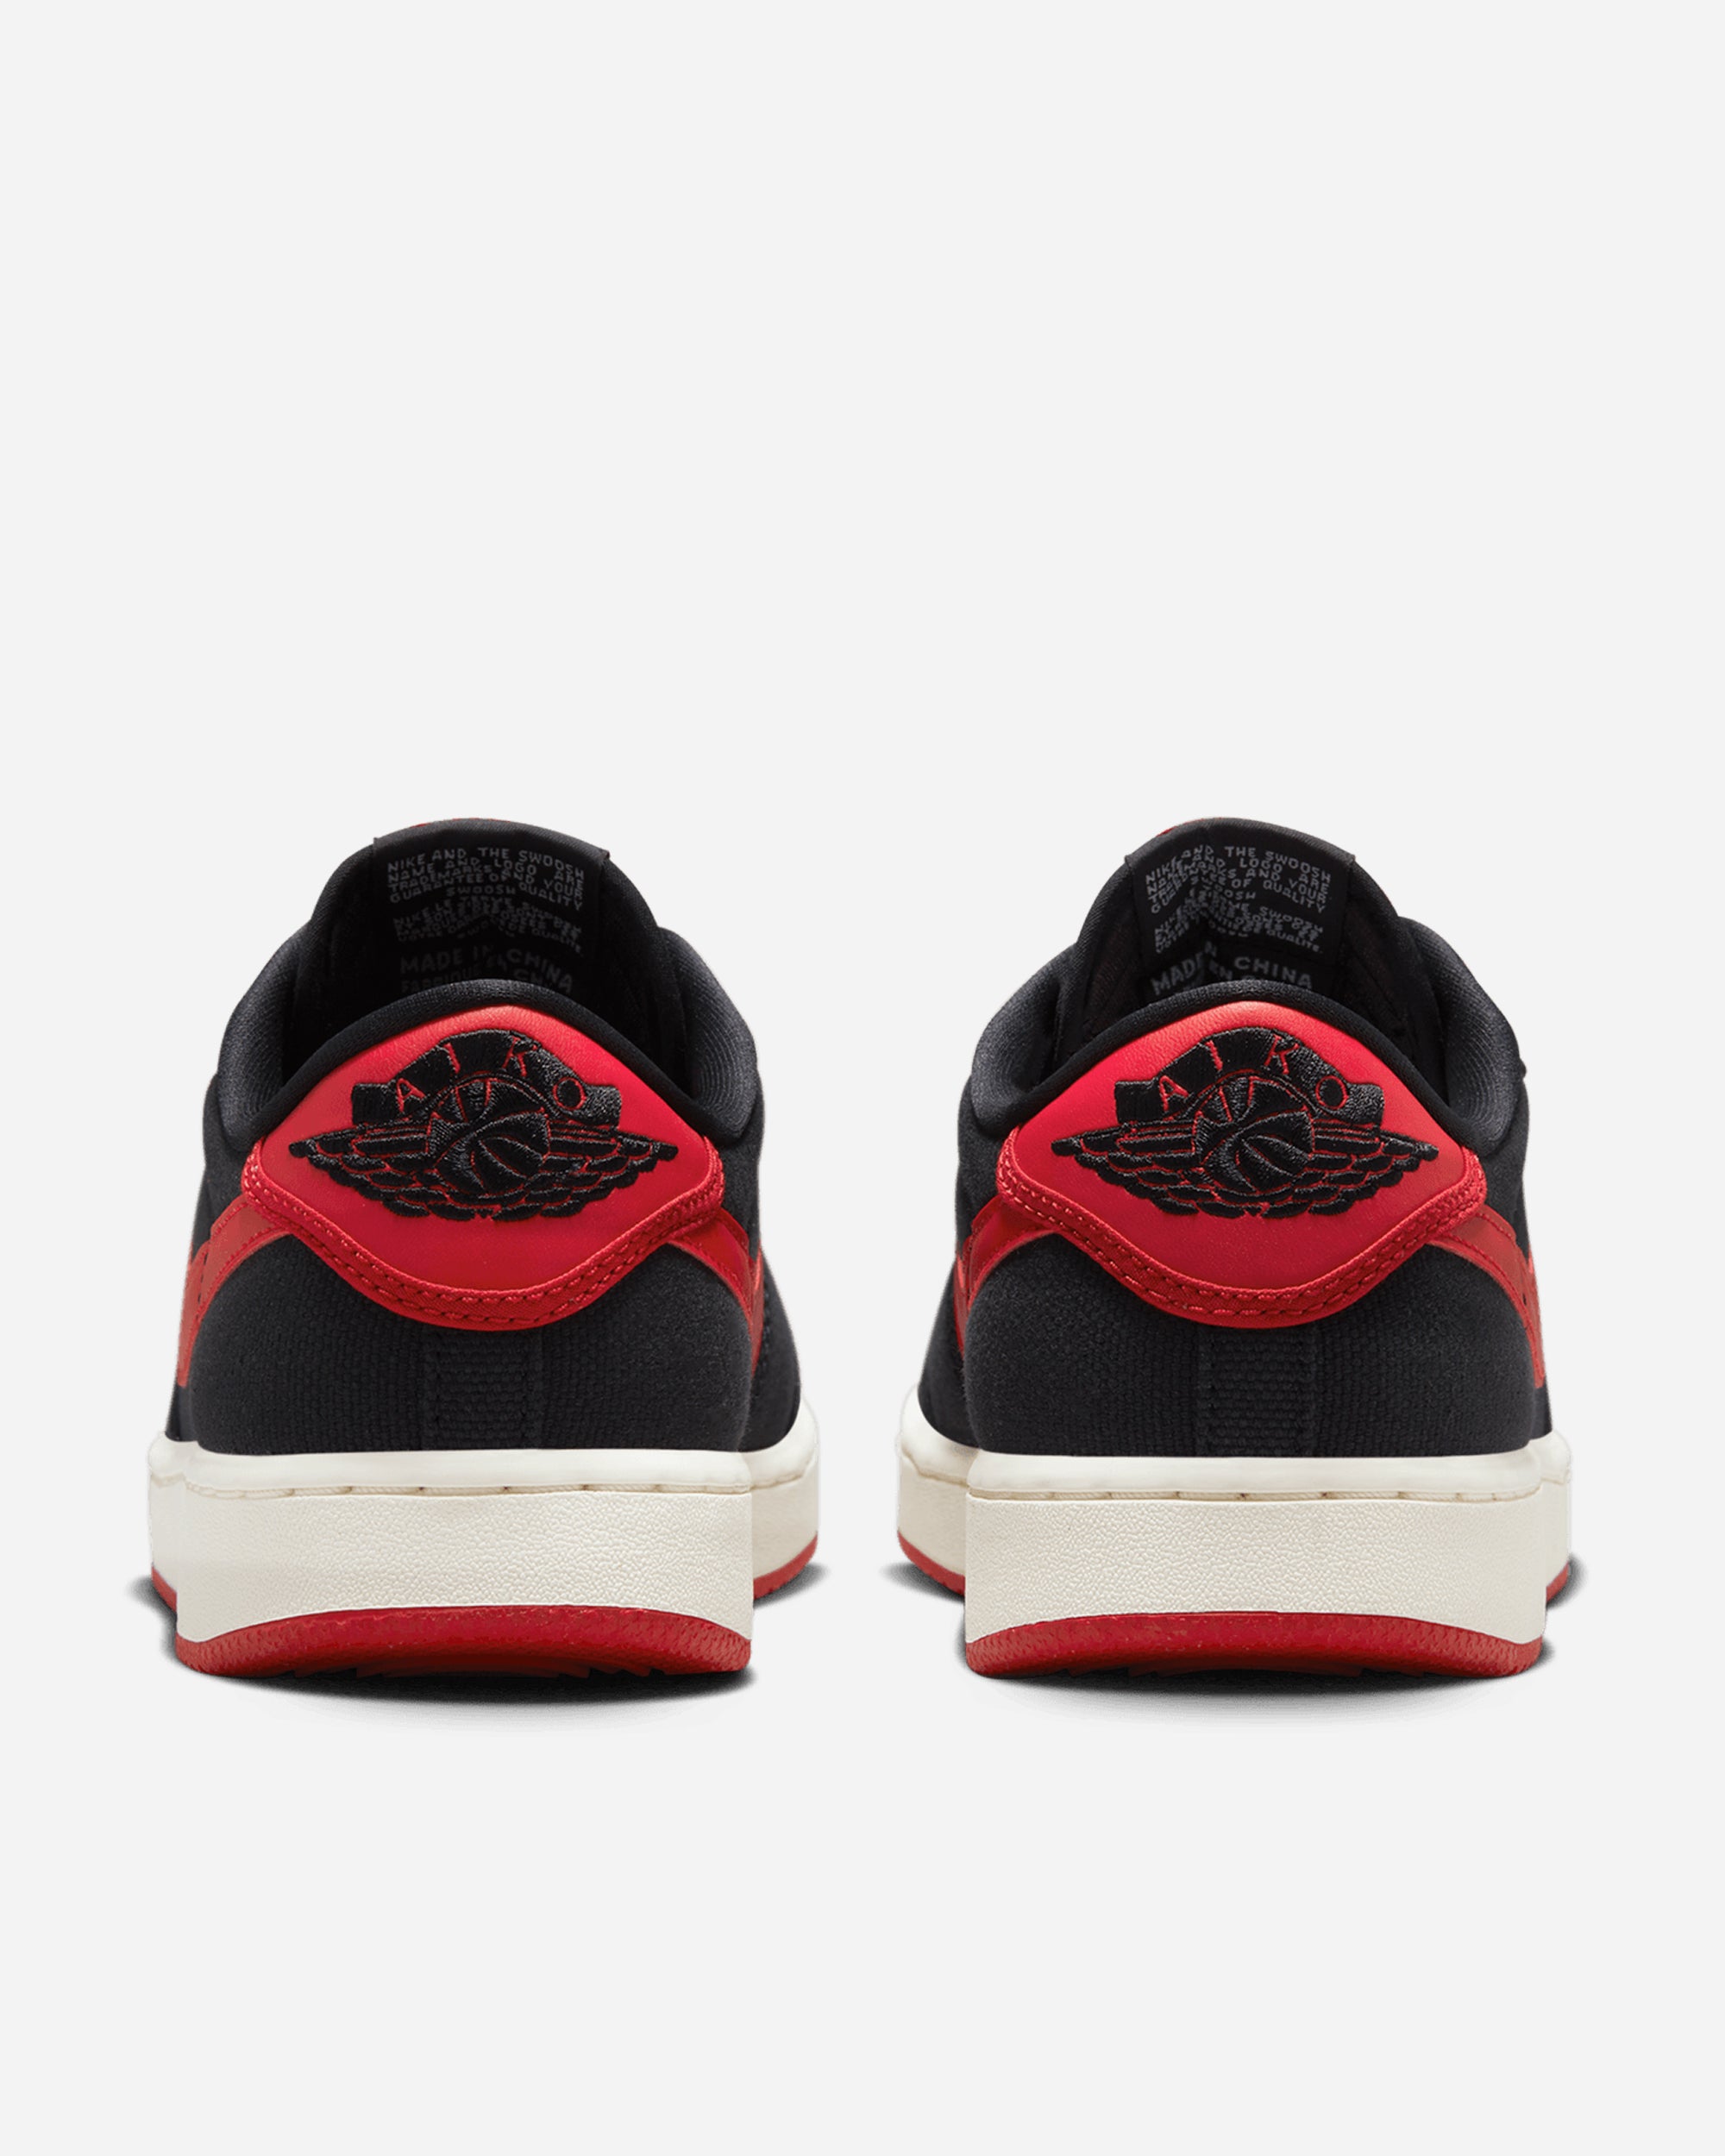 Jordan Brand Air Jordan 1 KO Low BLACK/VARSITY RED-SAIL DX4981-006